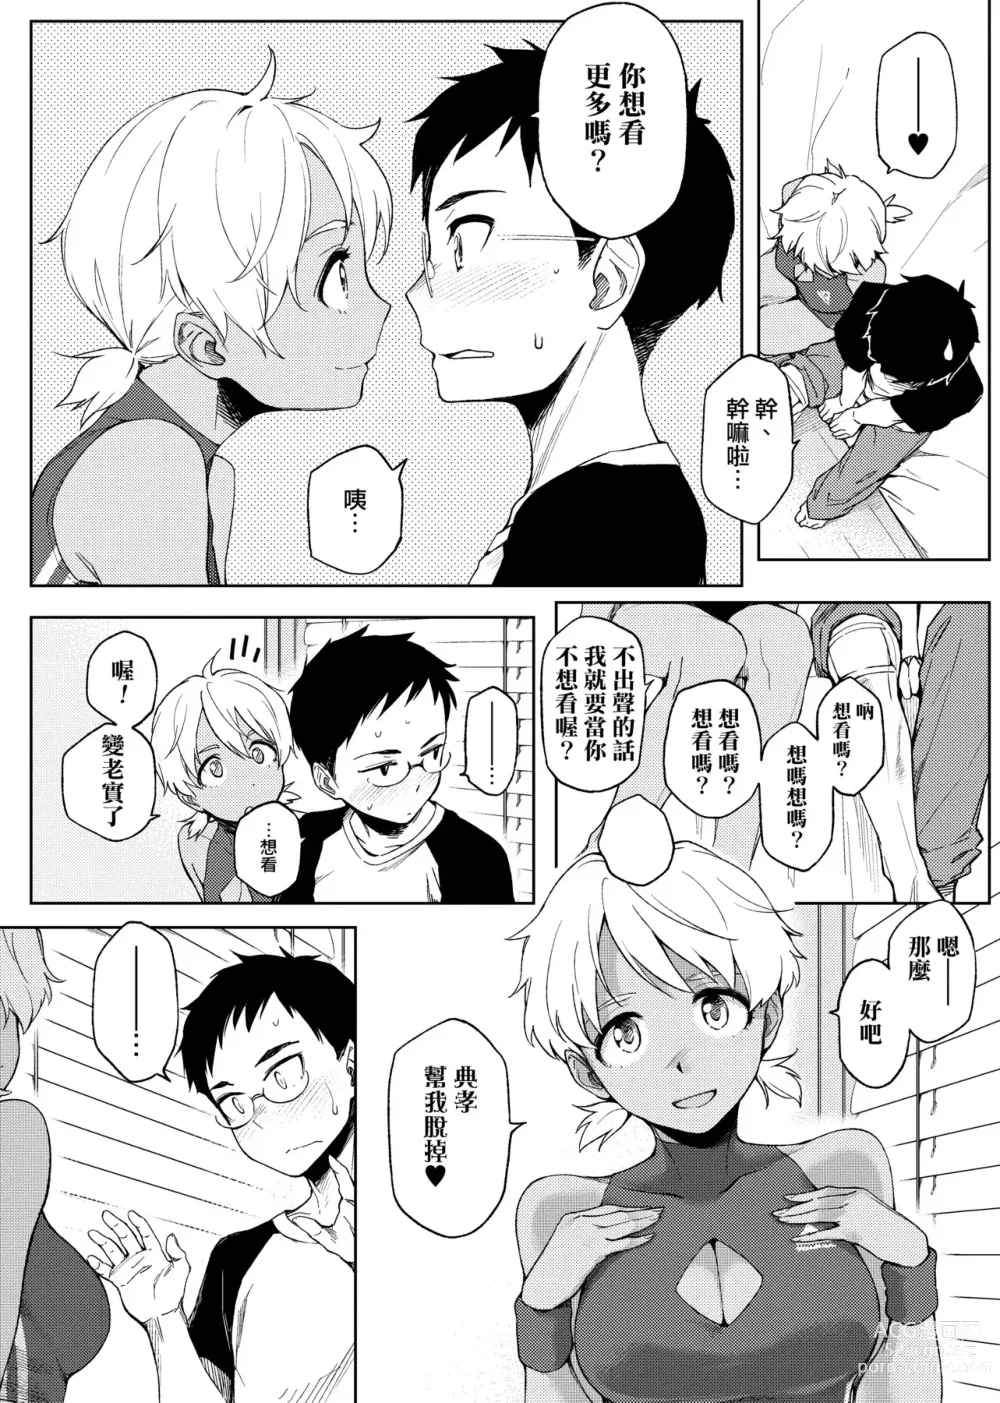 Page 205 of manga Natsu Koi Ota Girl - What Brings You to Japan?